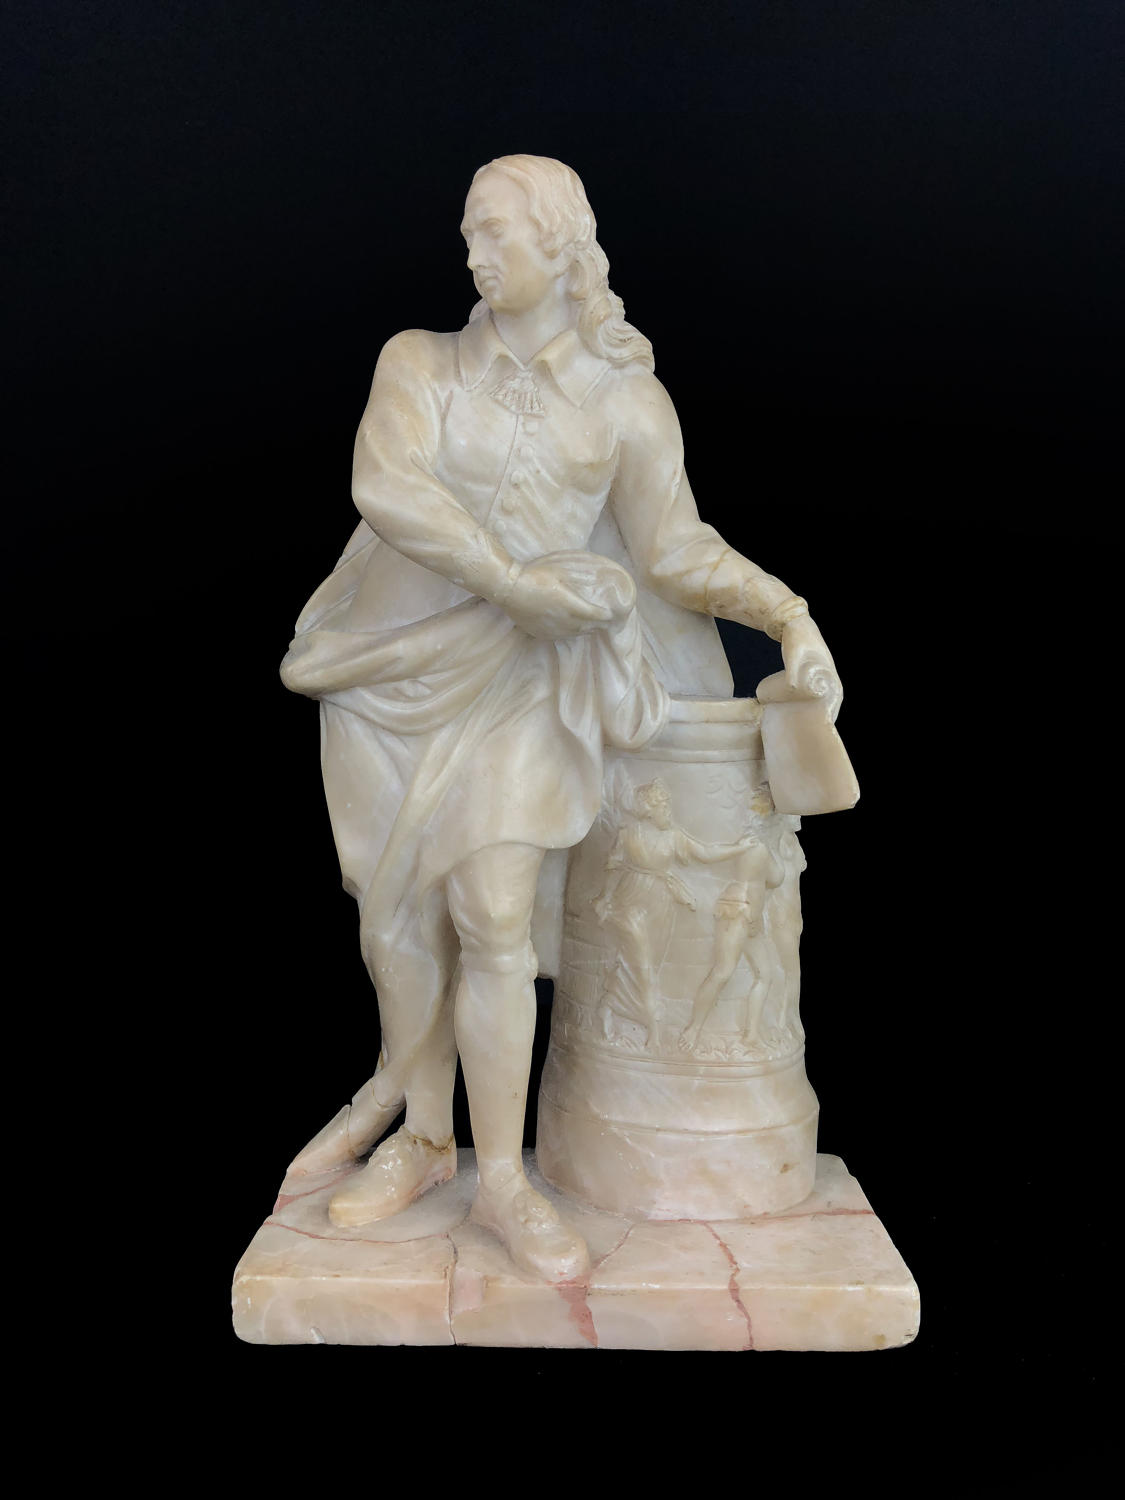 A carved alabaster figure of John Milton